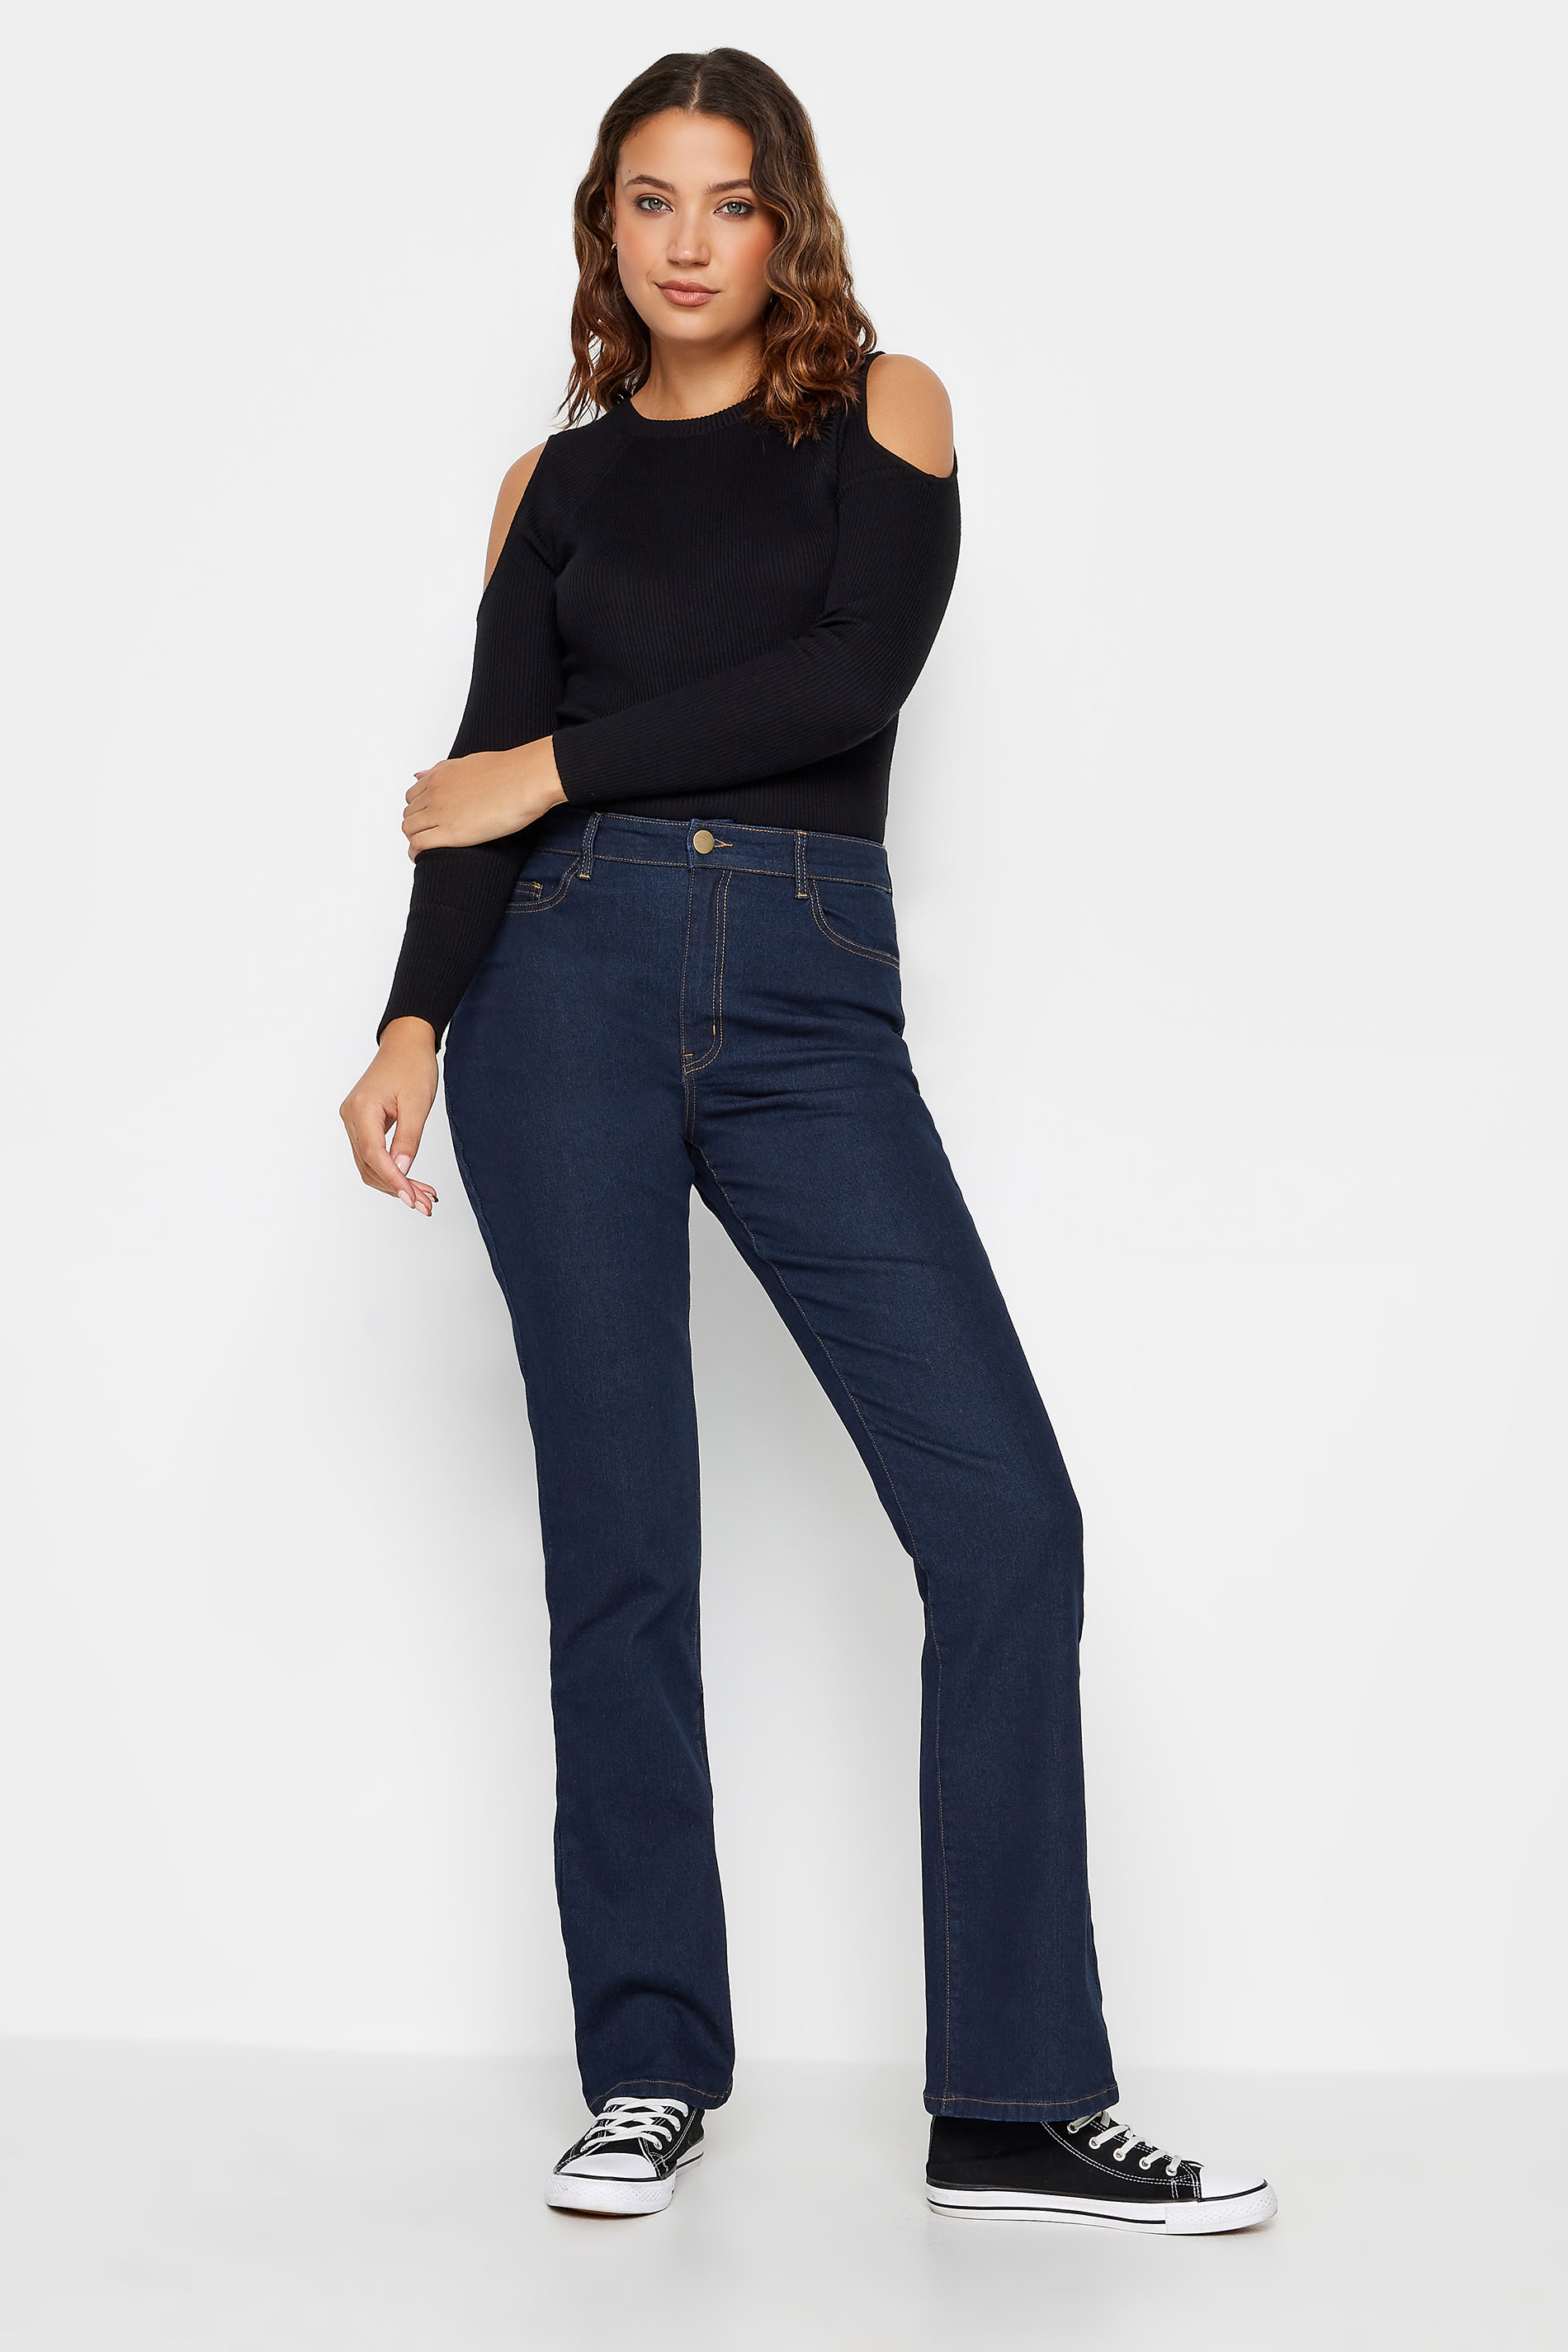 LTS Tall Indigo Blue Denim Bootcut Jeans | Long Tall Sally 2